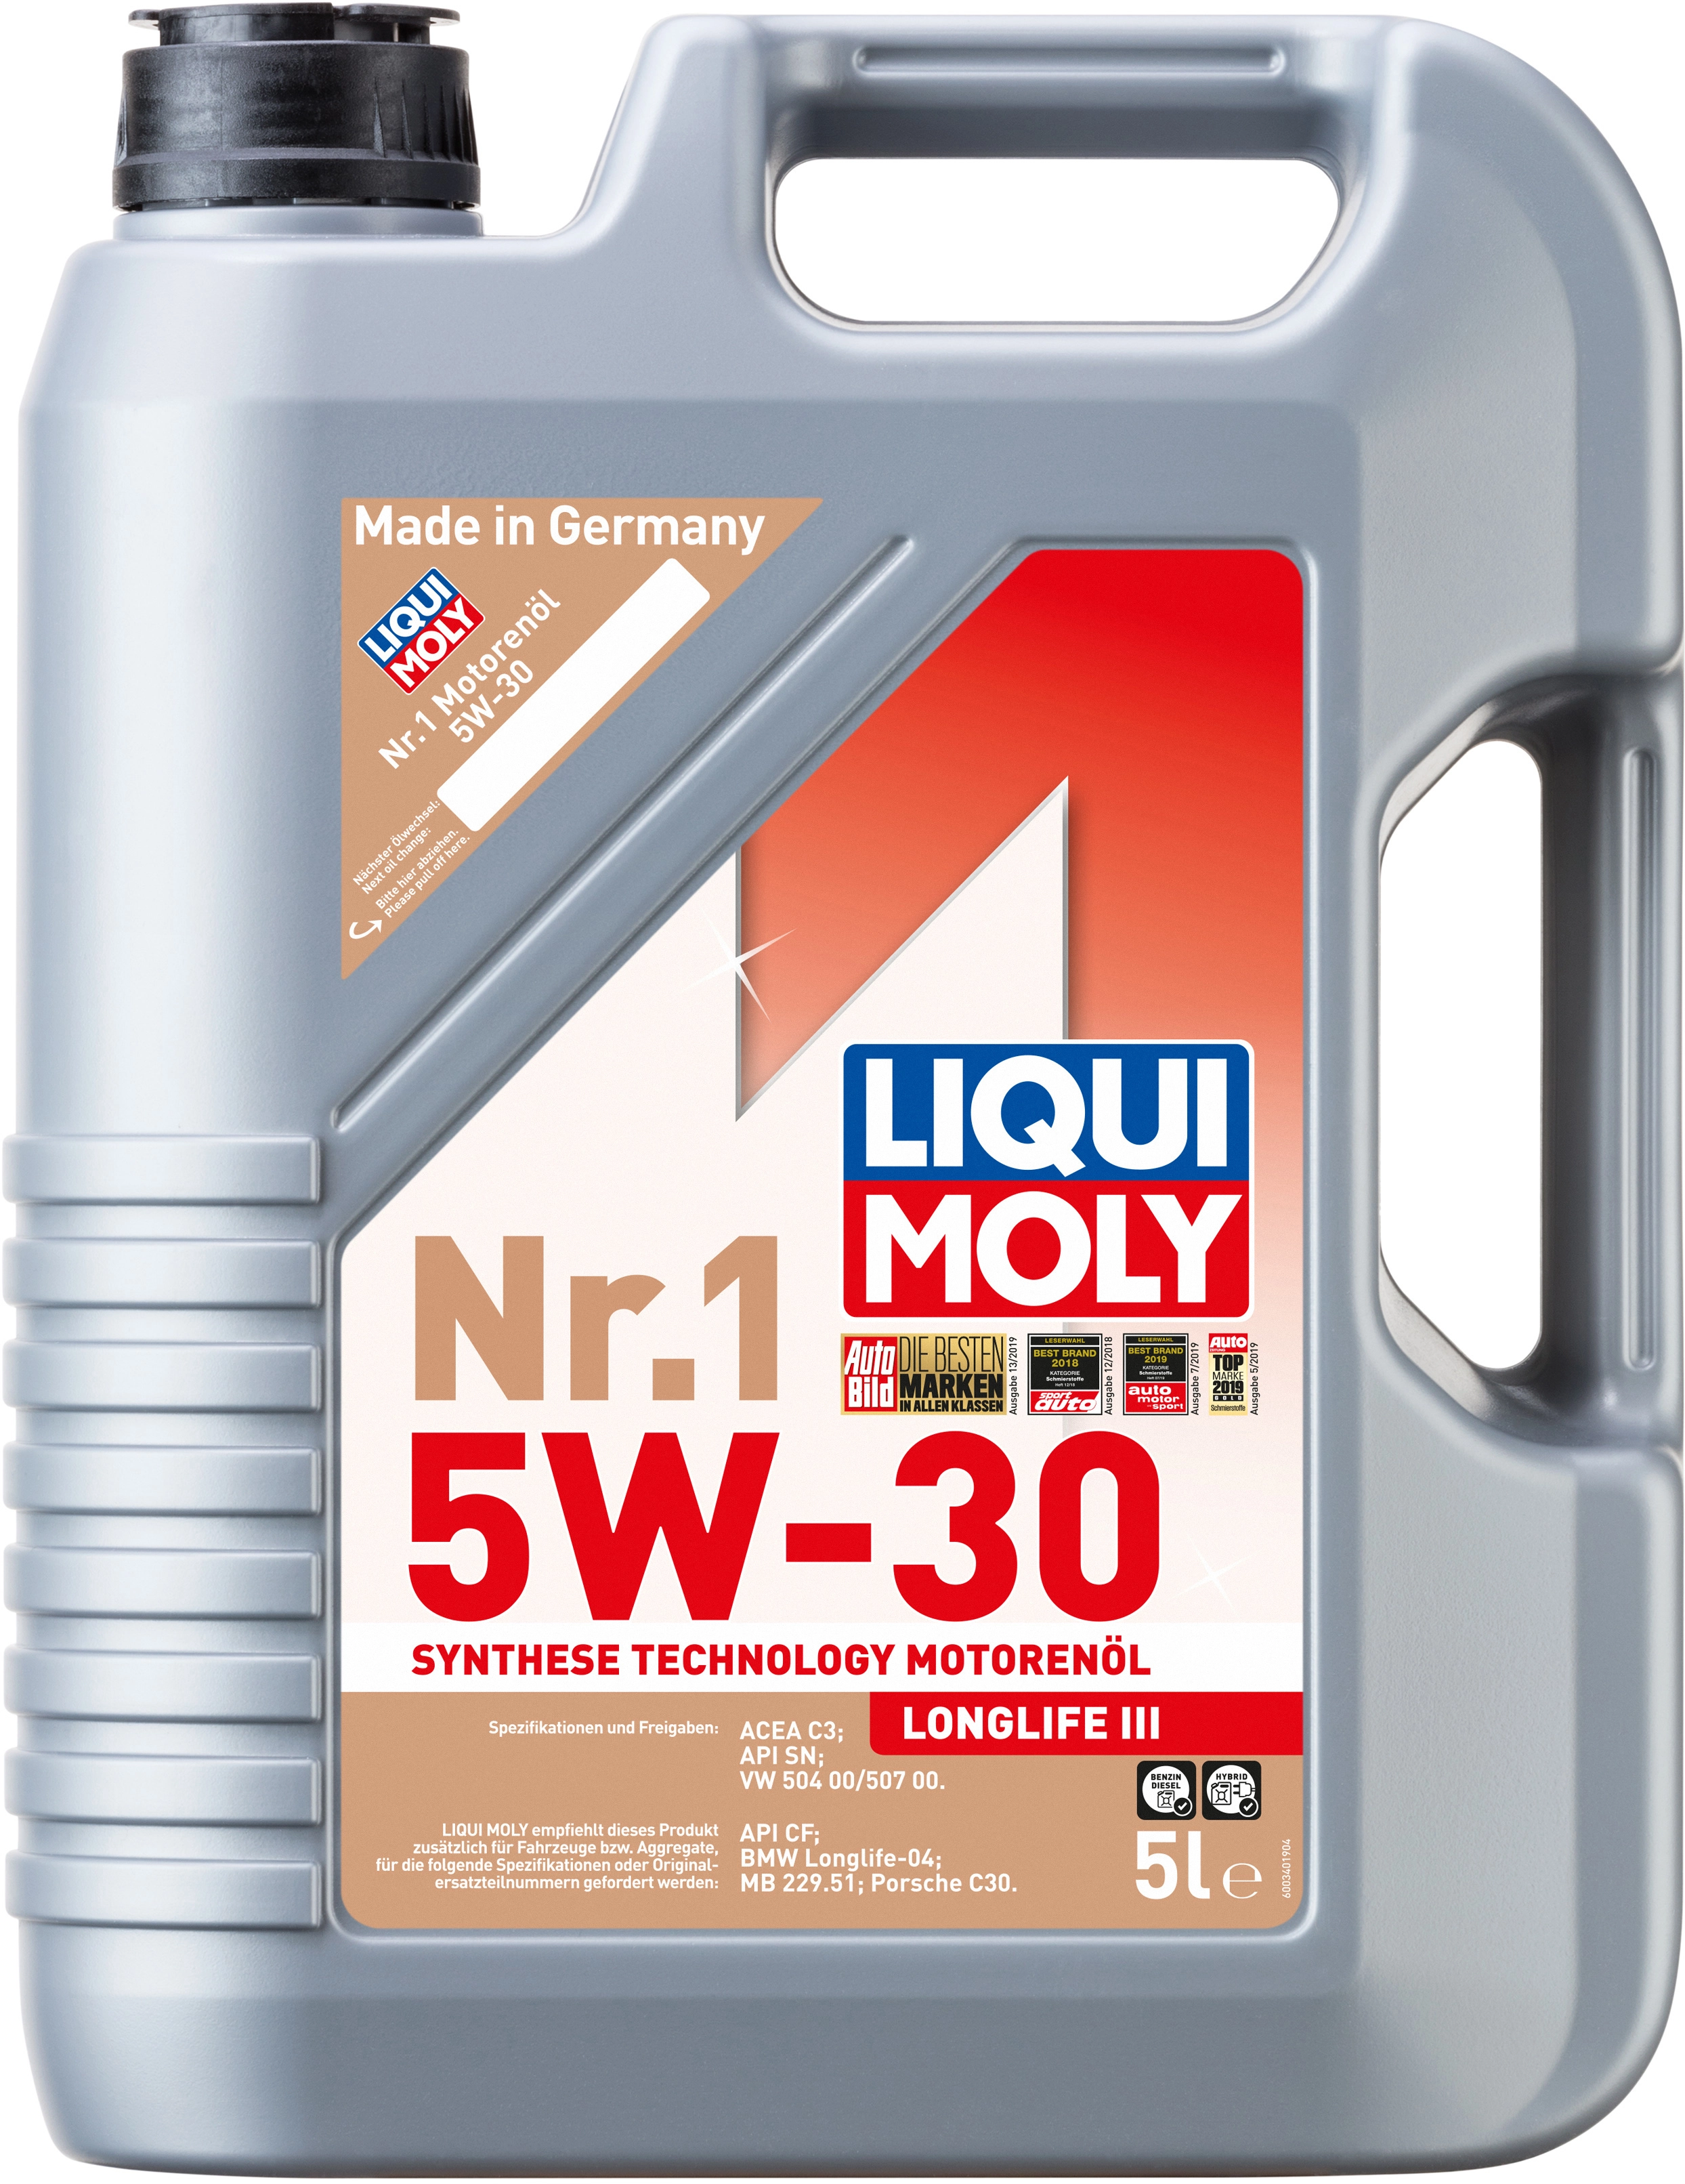 Liqui Moly 5W-30 Top Tec 4200 Longlife 3 günstig kaufen!